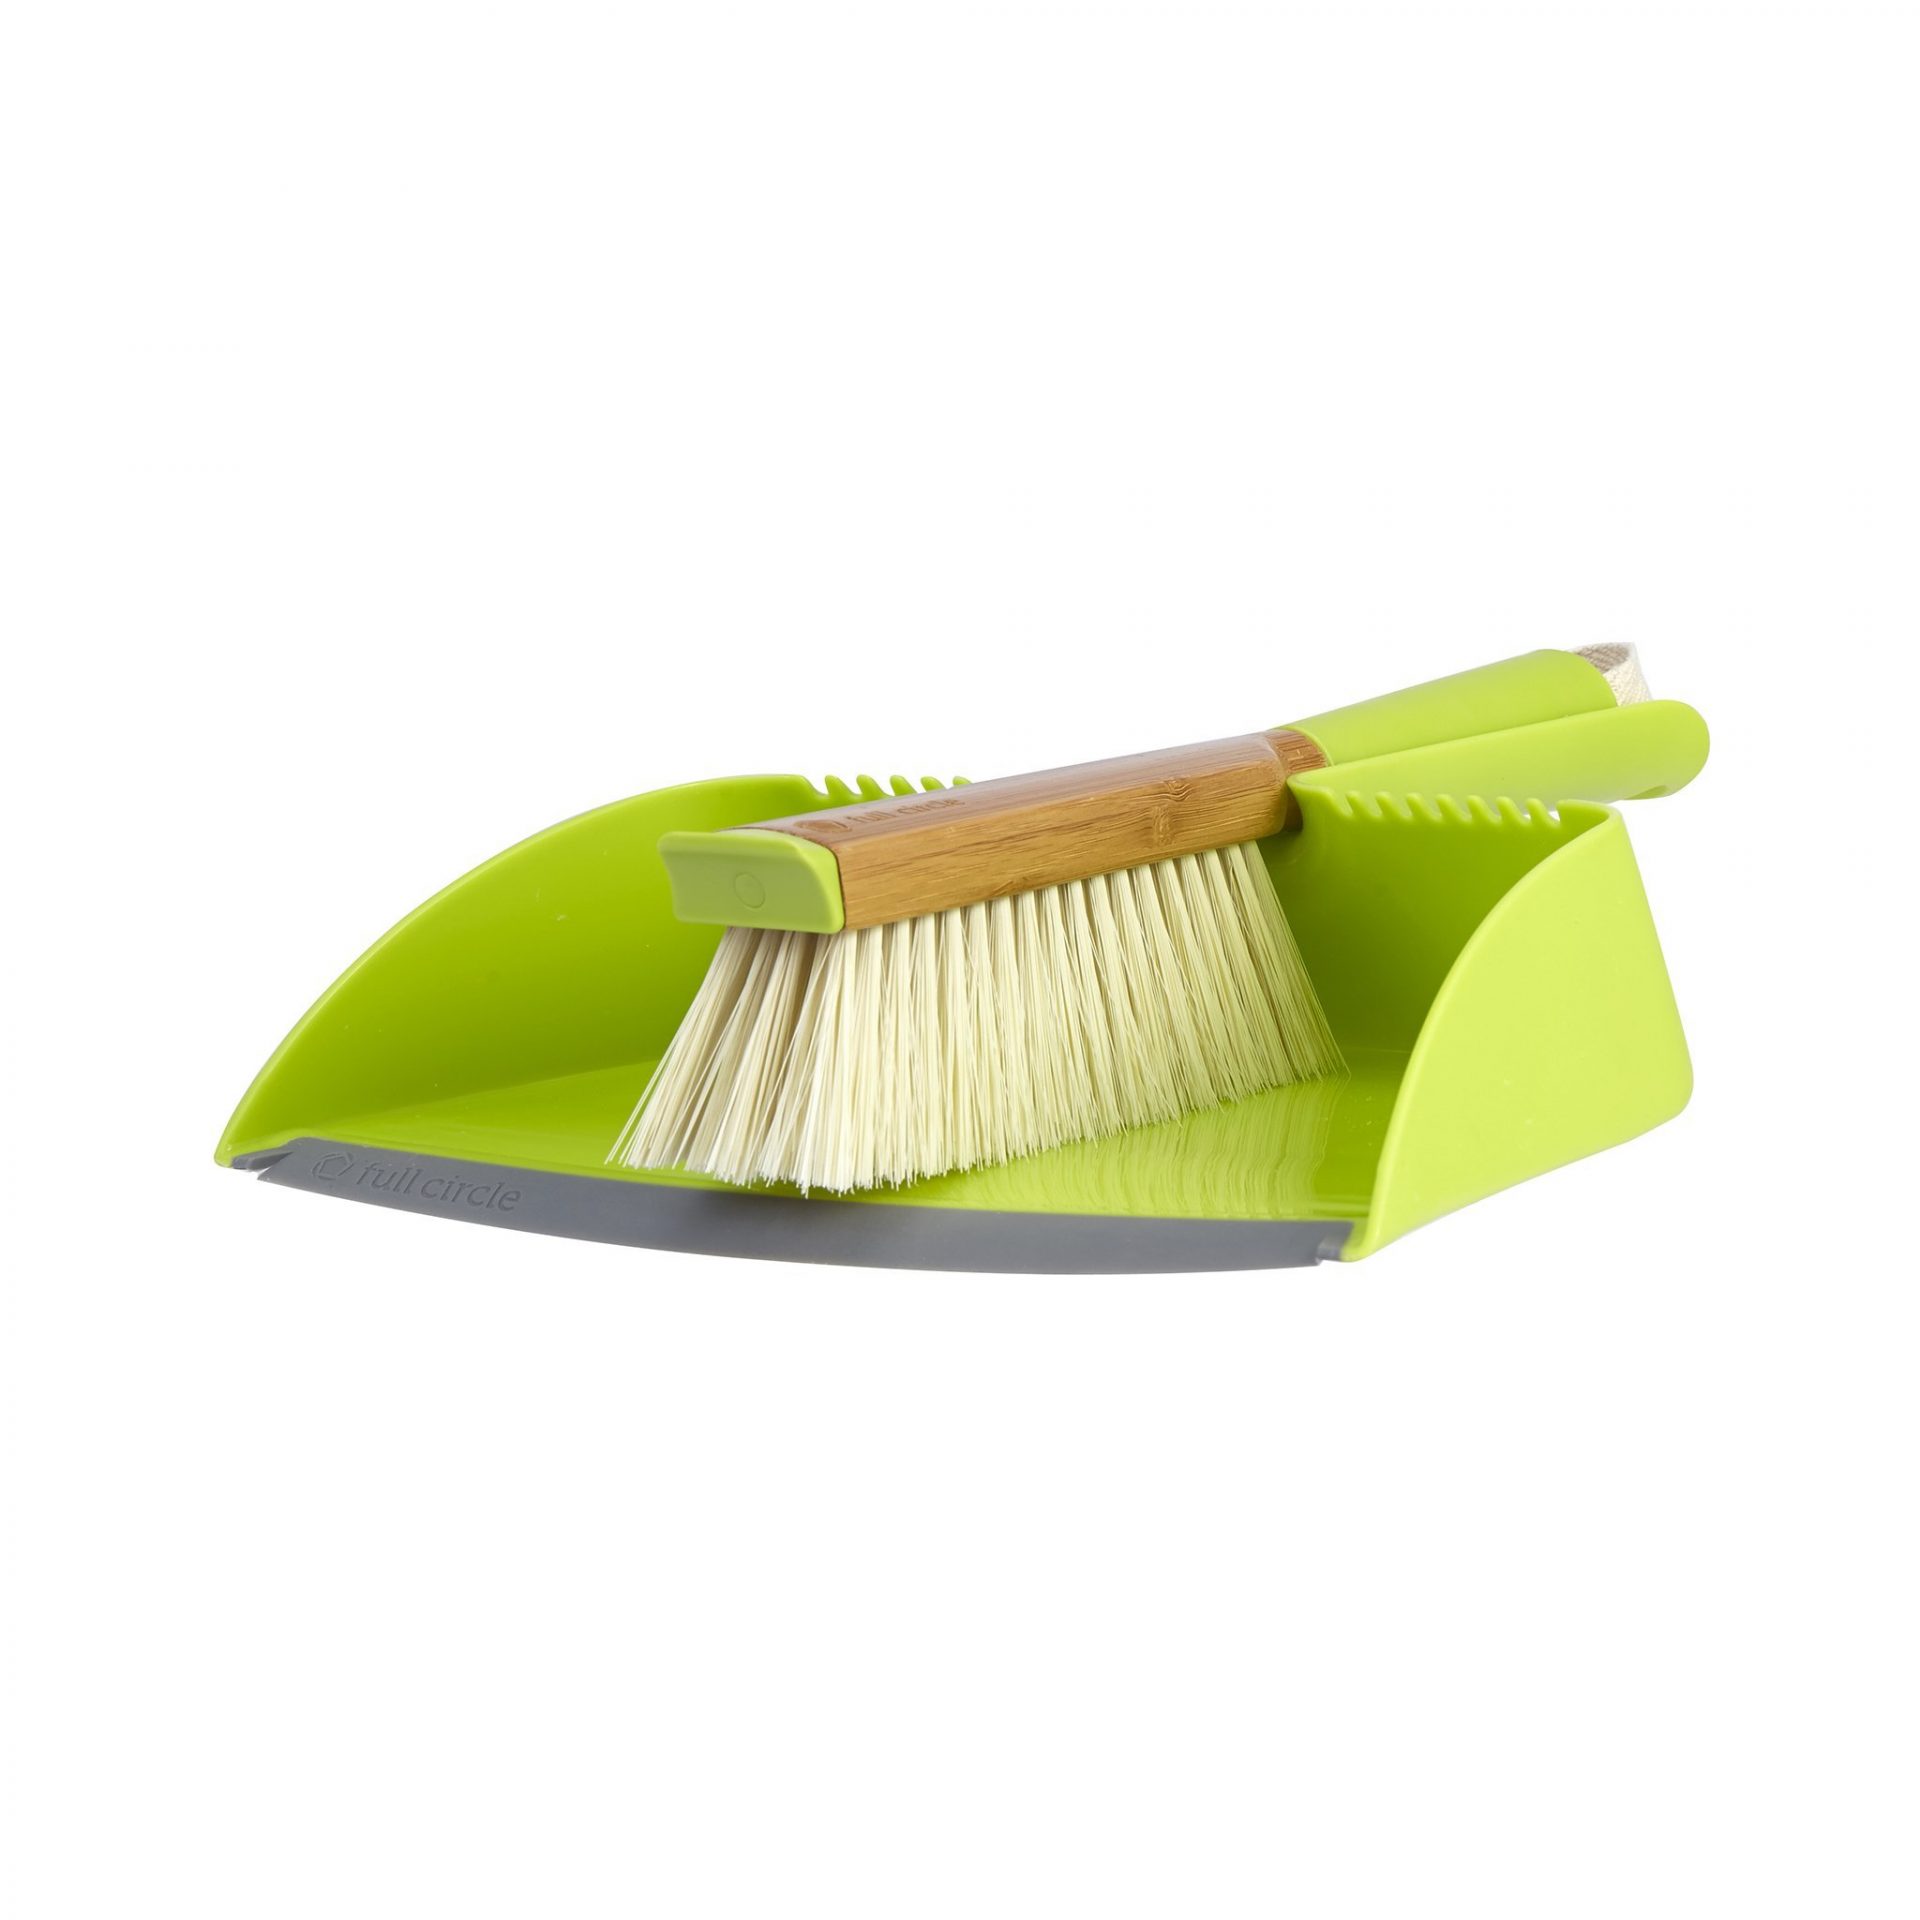 Full Circle Clean Team Brush & Dustpan Set Product Image 1